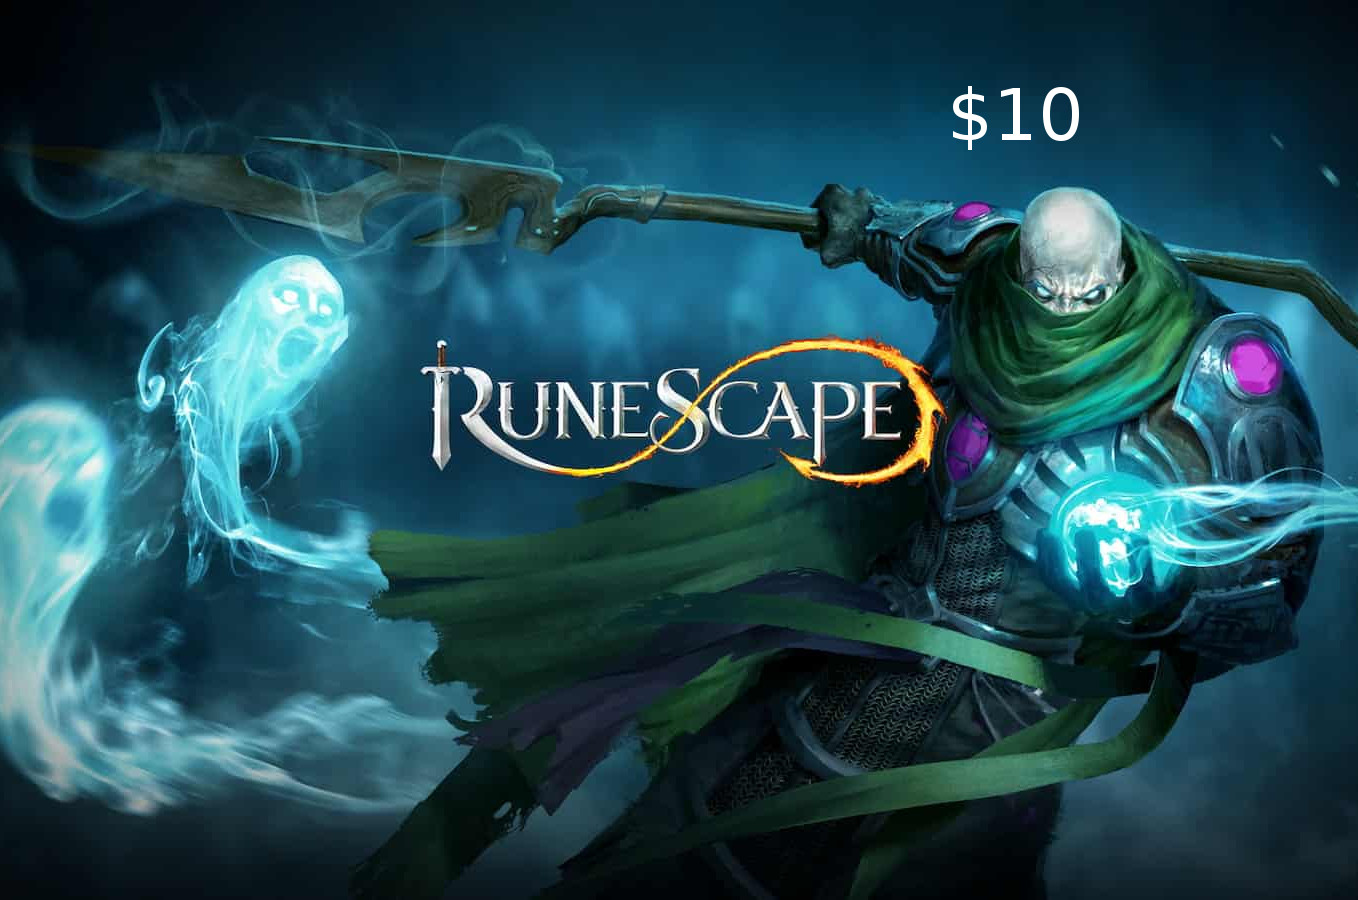 Runescape $10 Prepaid Game Card, 10.11 usd